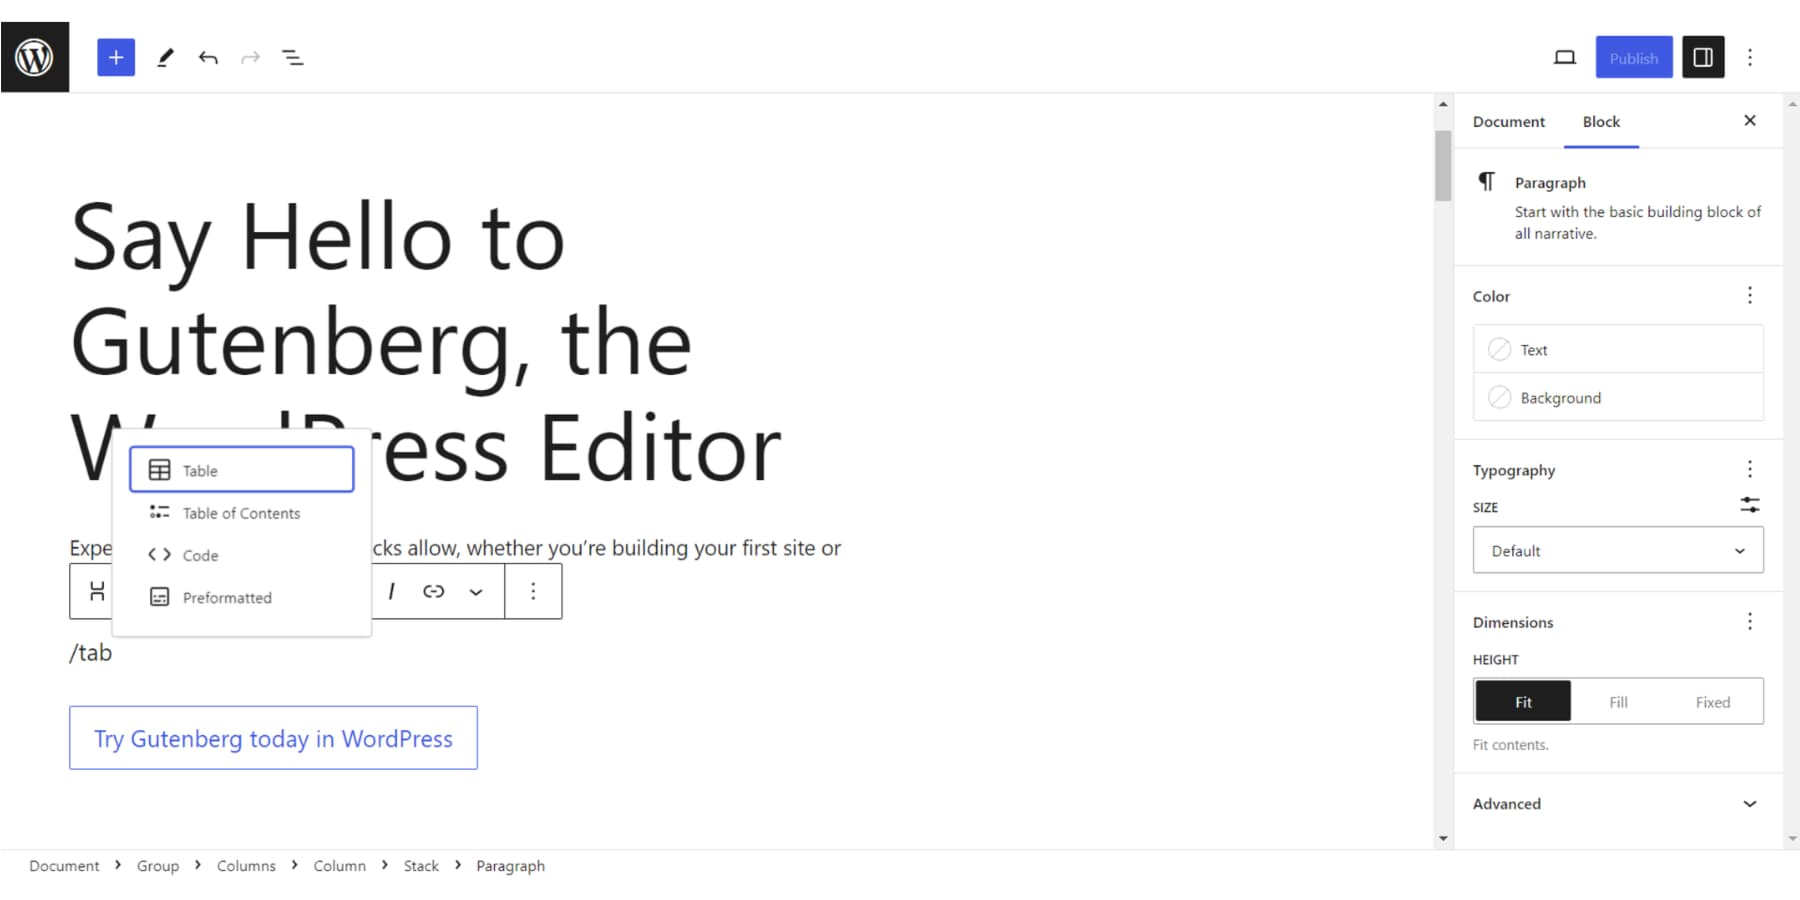 A screenshot of WordPress' Block Editor